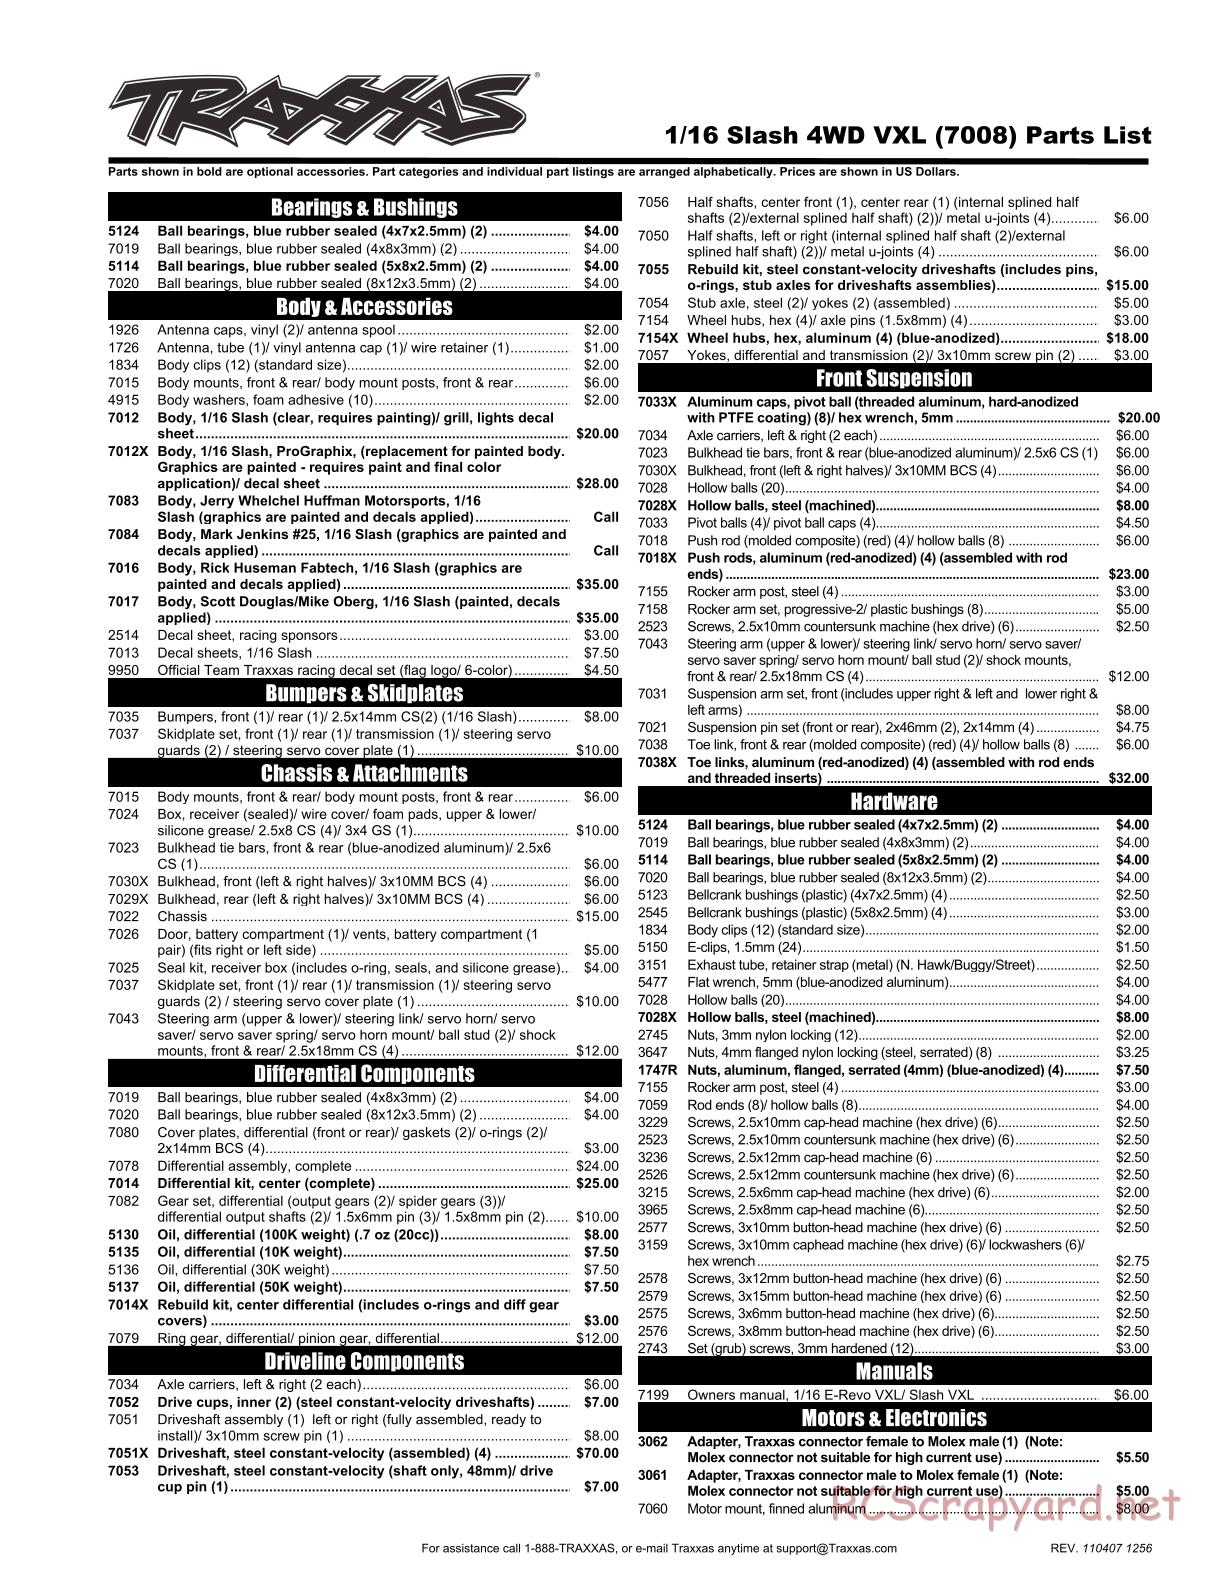 Traxxas - 1/16 Slash VXL 4WD (2009) - Parts List - Page 1